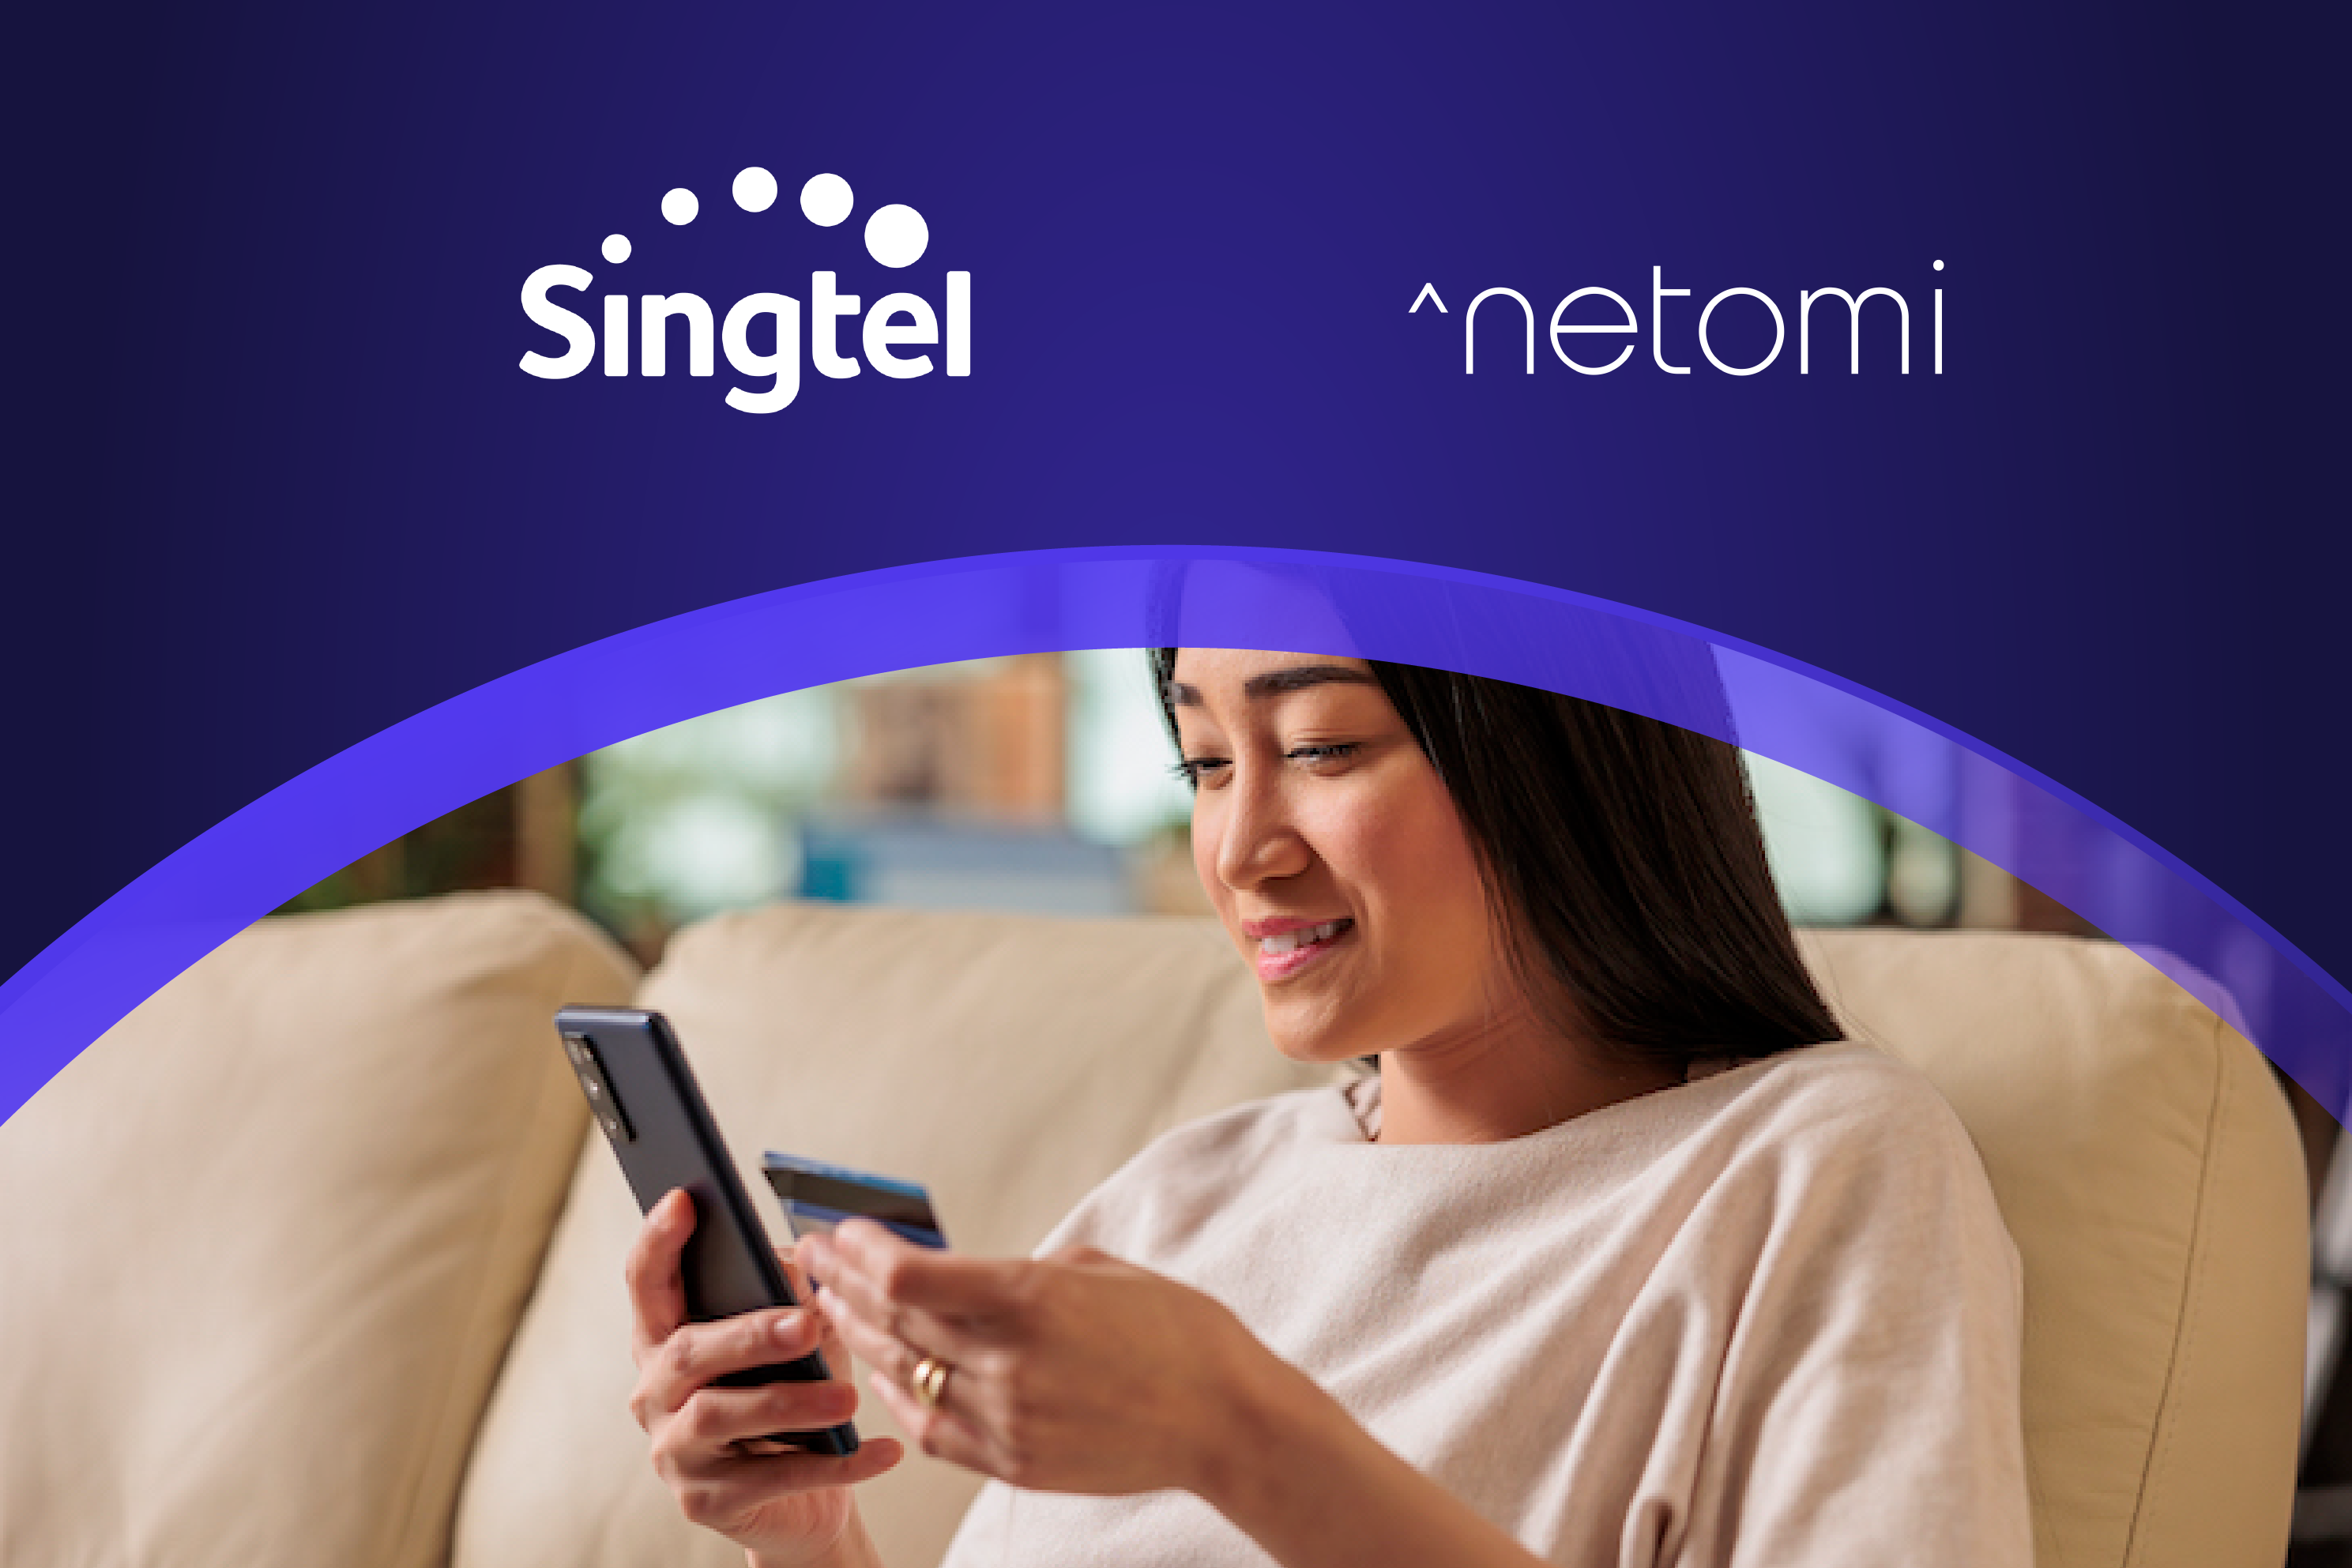 Singtel raises the bar for telecom customer service with Netomi’s powerful AI 